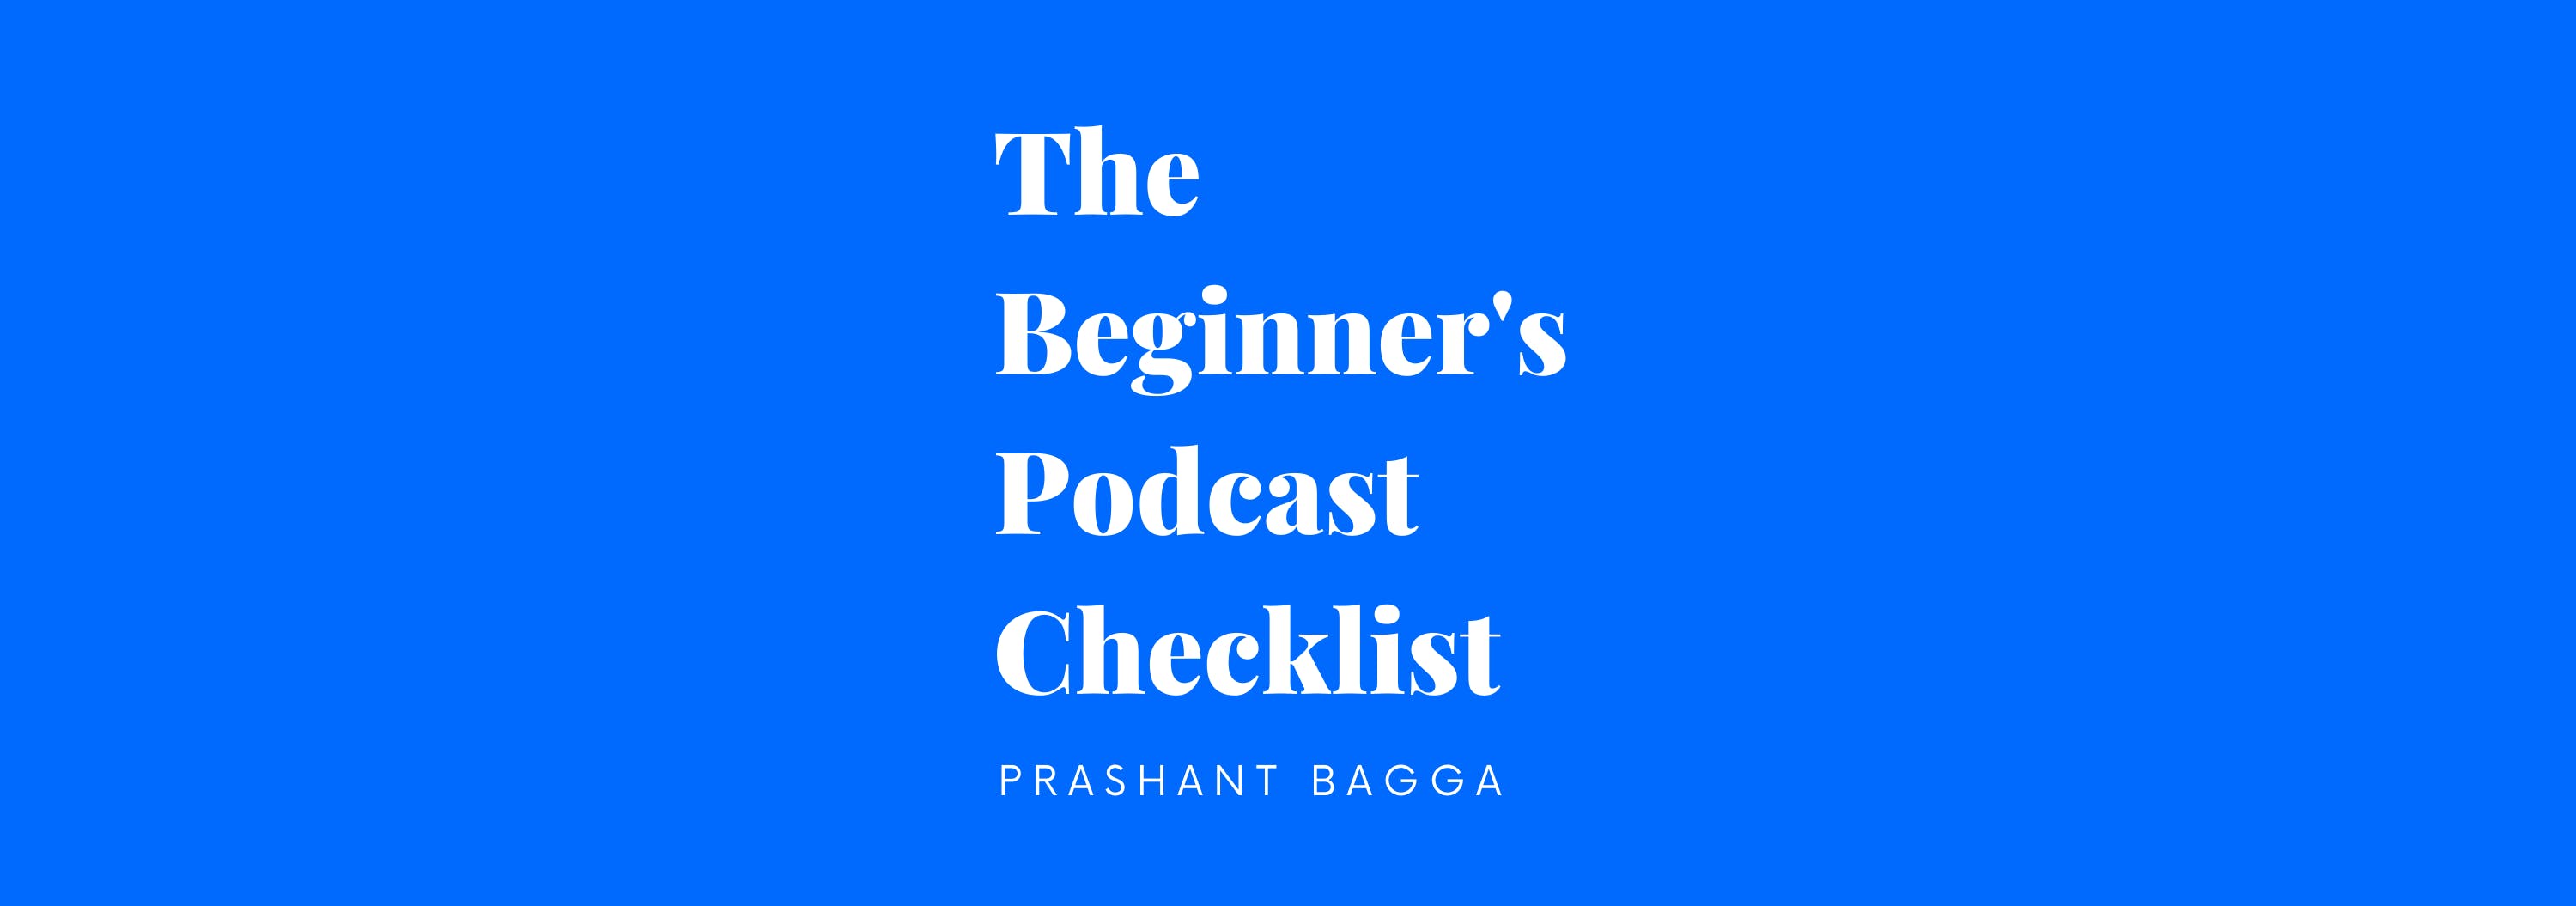 The Beginner's Podcast Checklist media 1